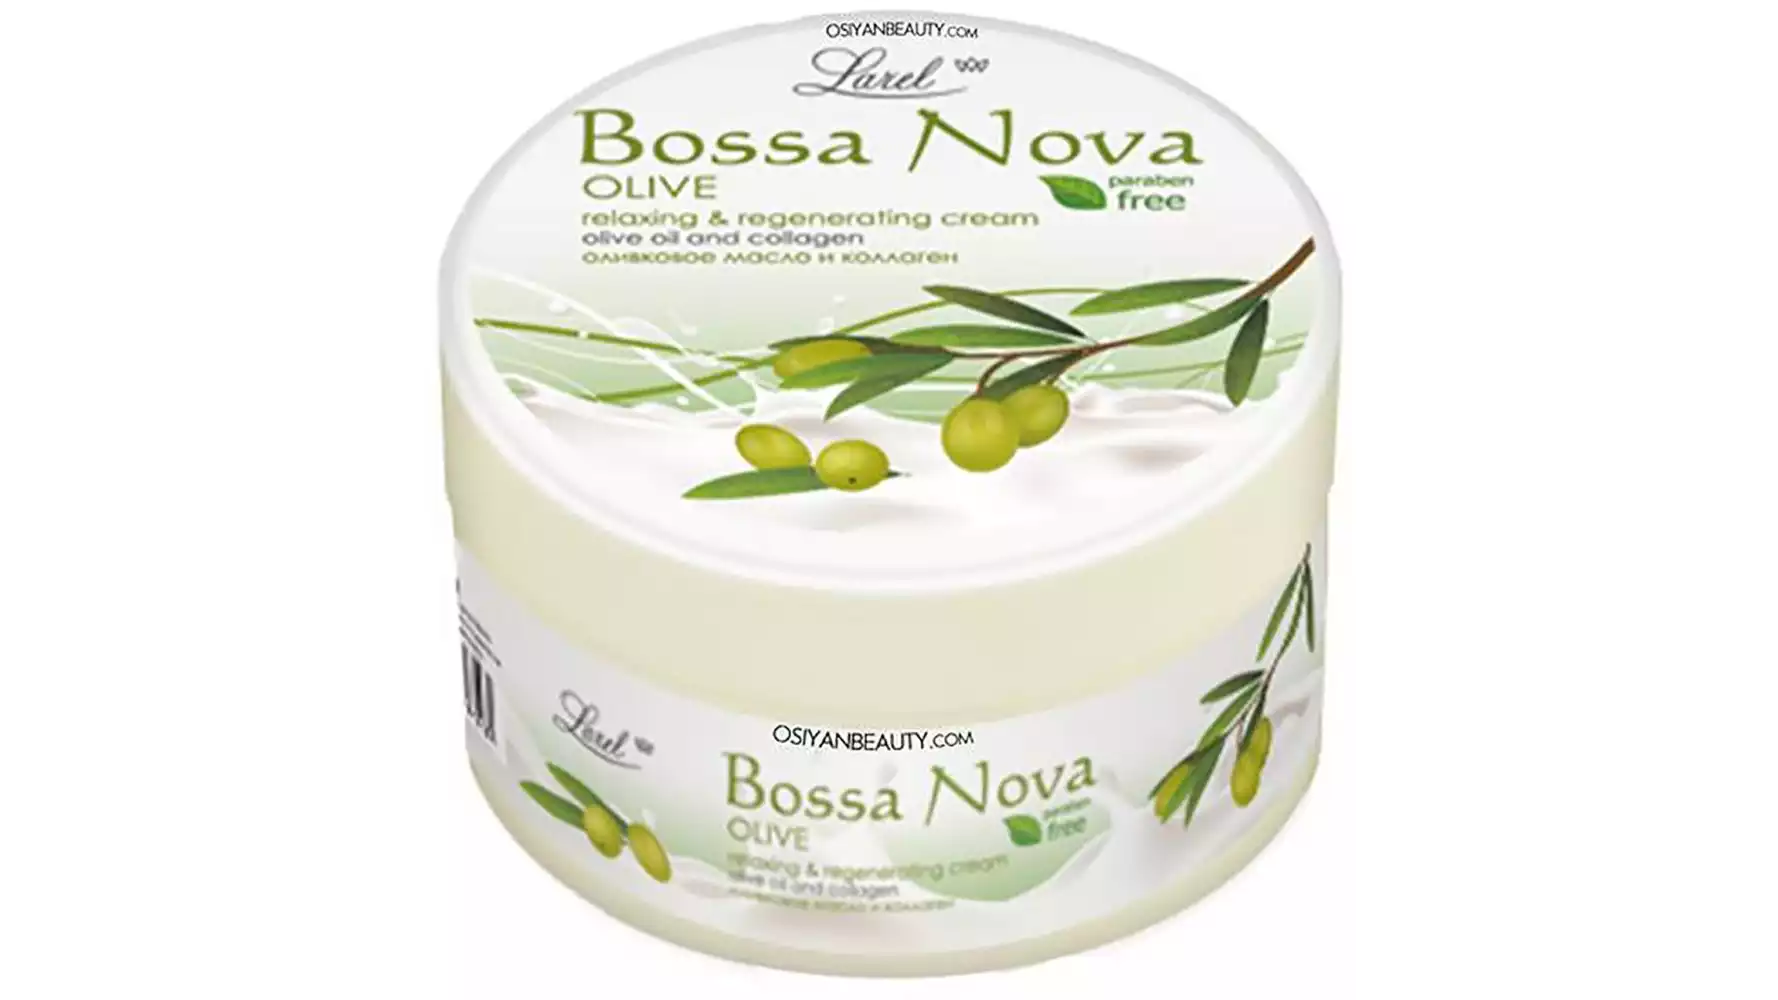 Larel Bossa Nova Cream Olive Oil And Collagen(Made In Europe) (200ml)